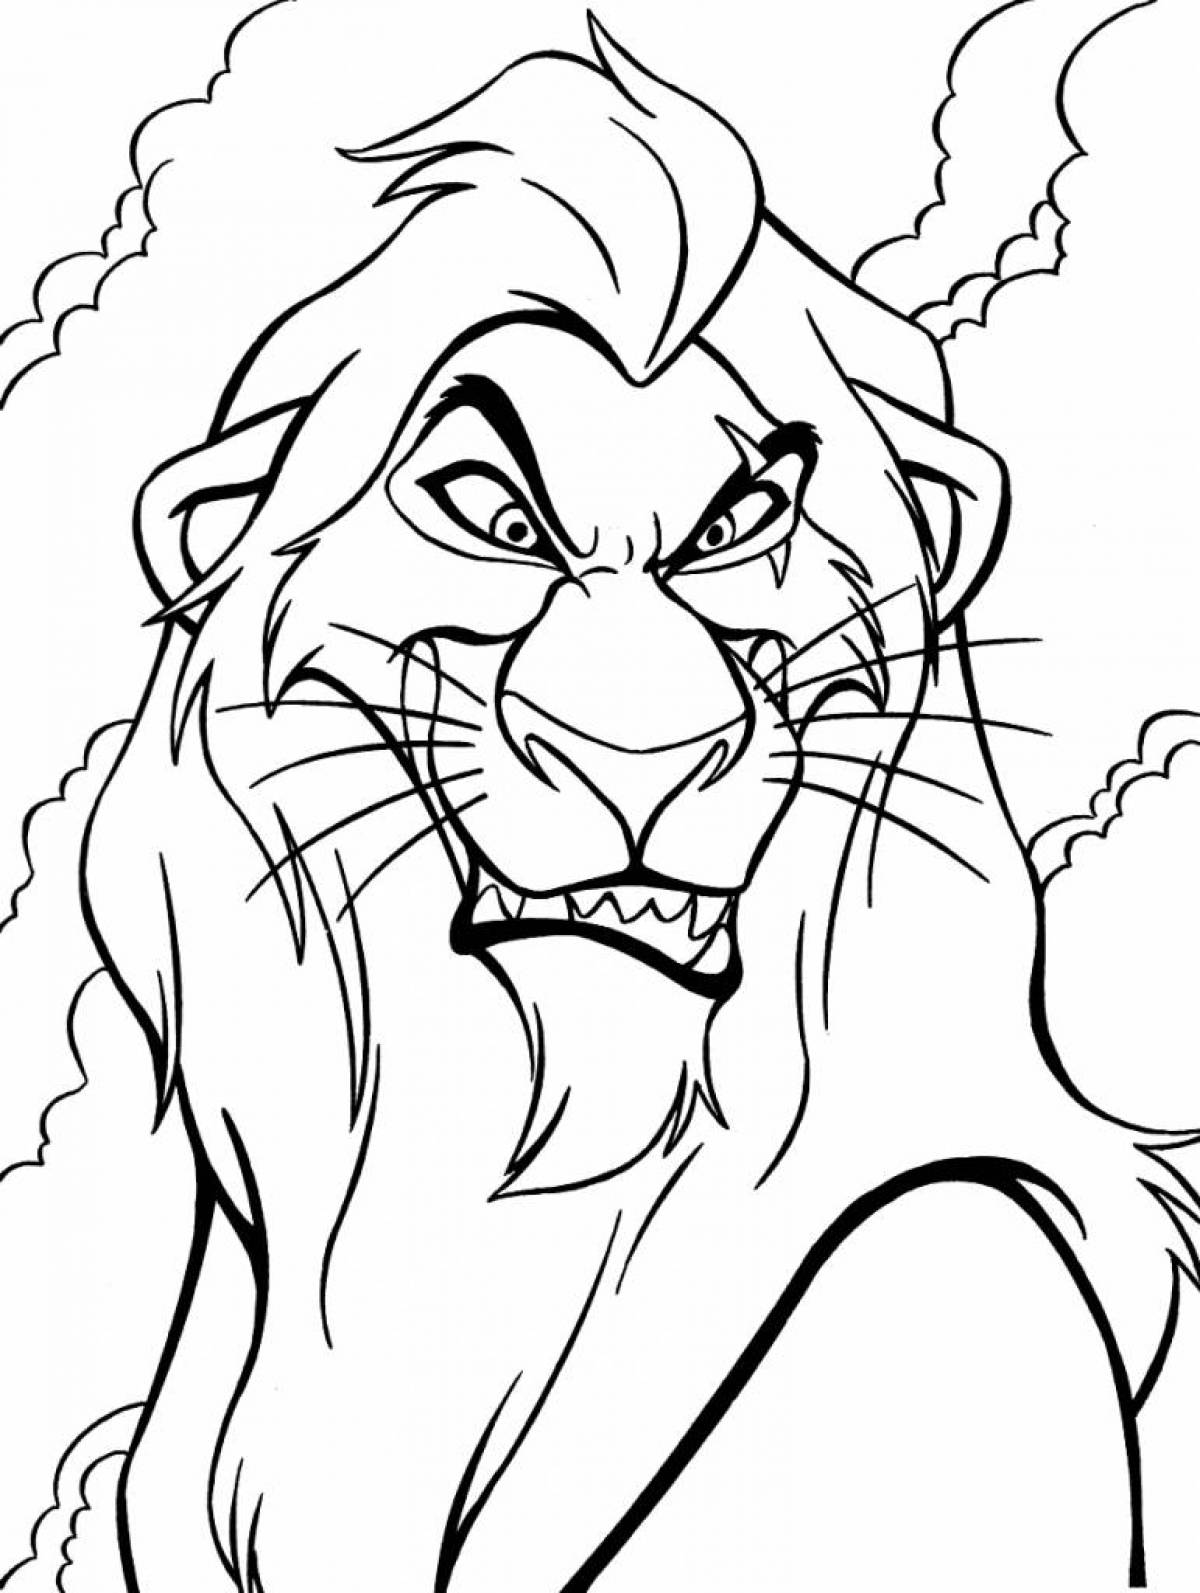 Royal king lion coloring page